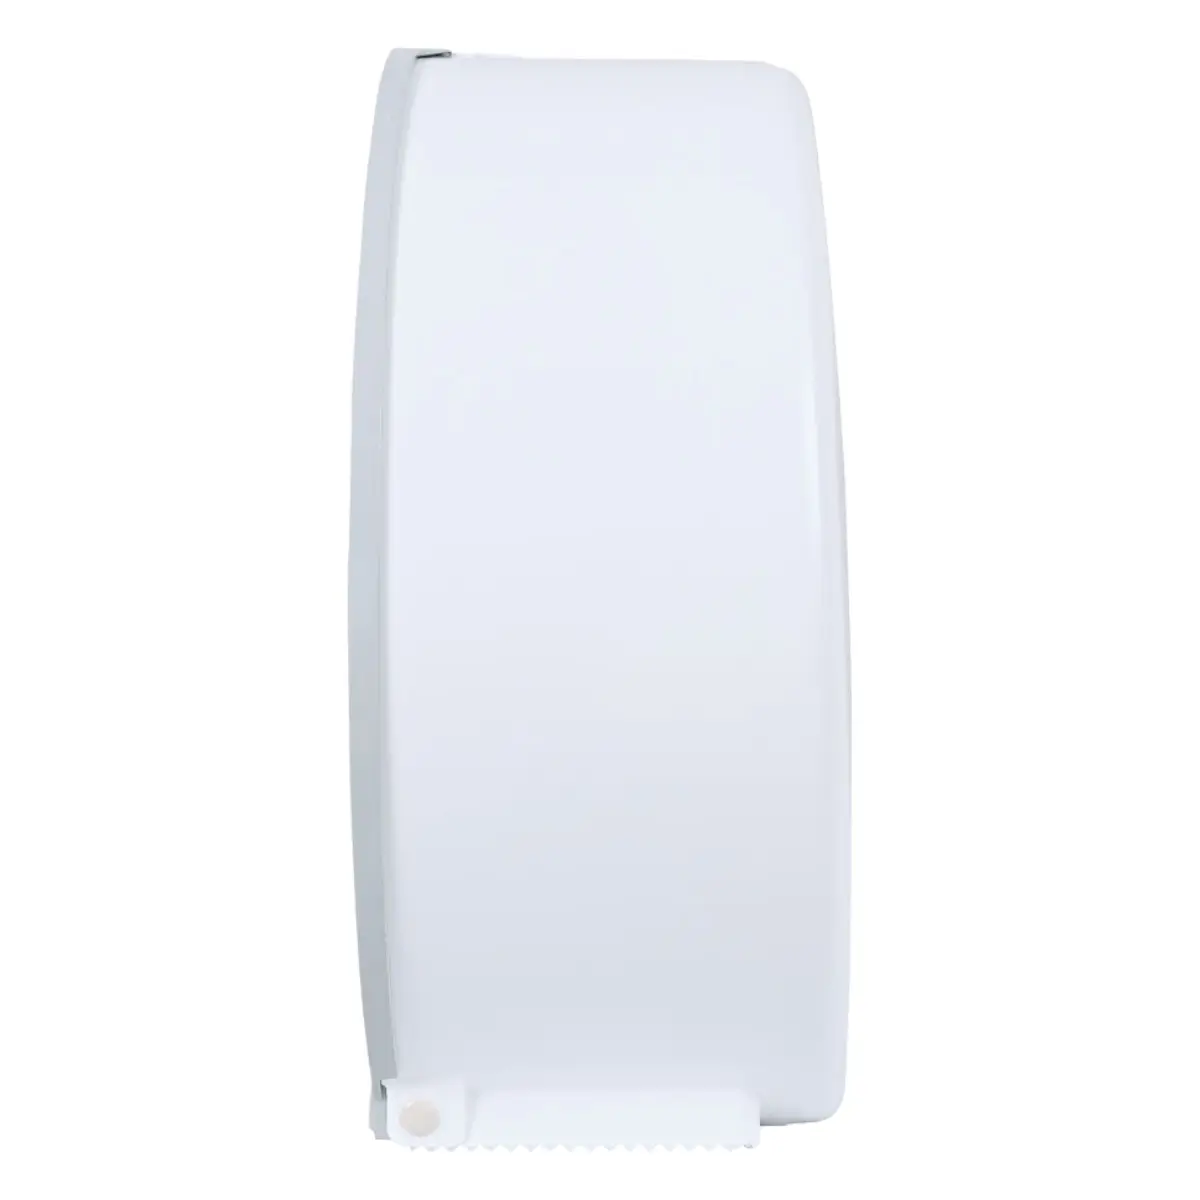 888351_3_toilettenpapierspender_1200